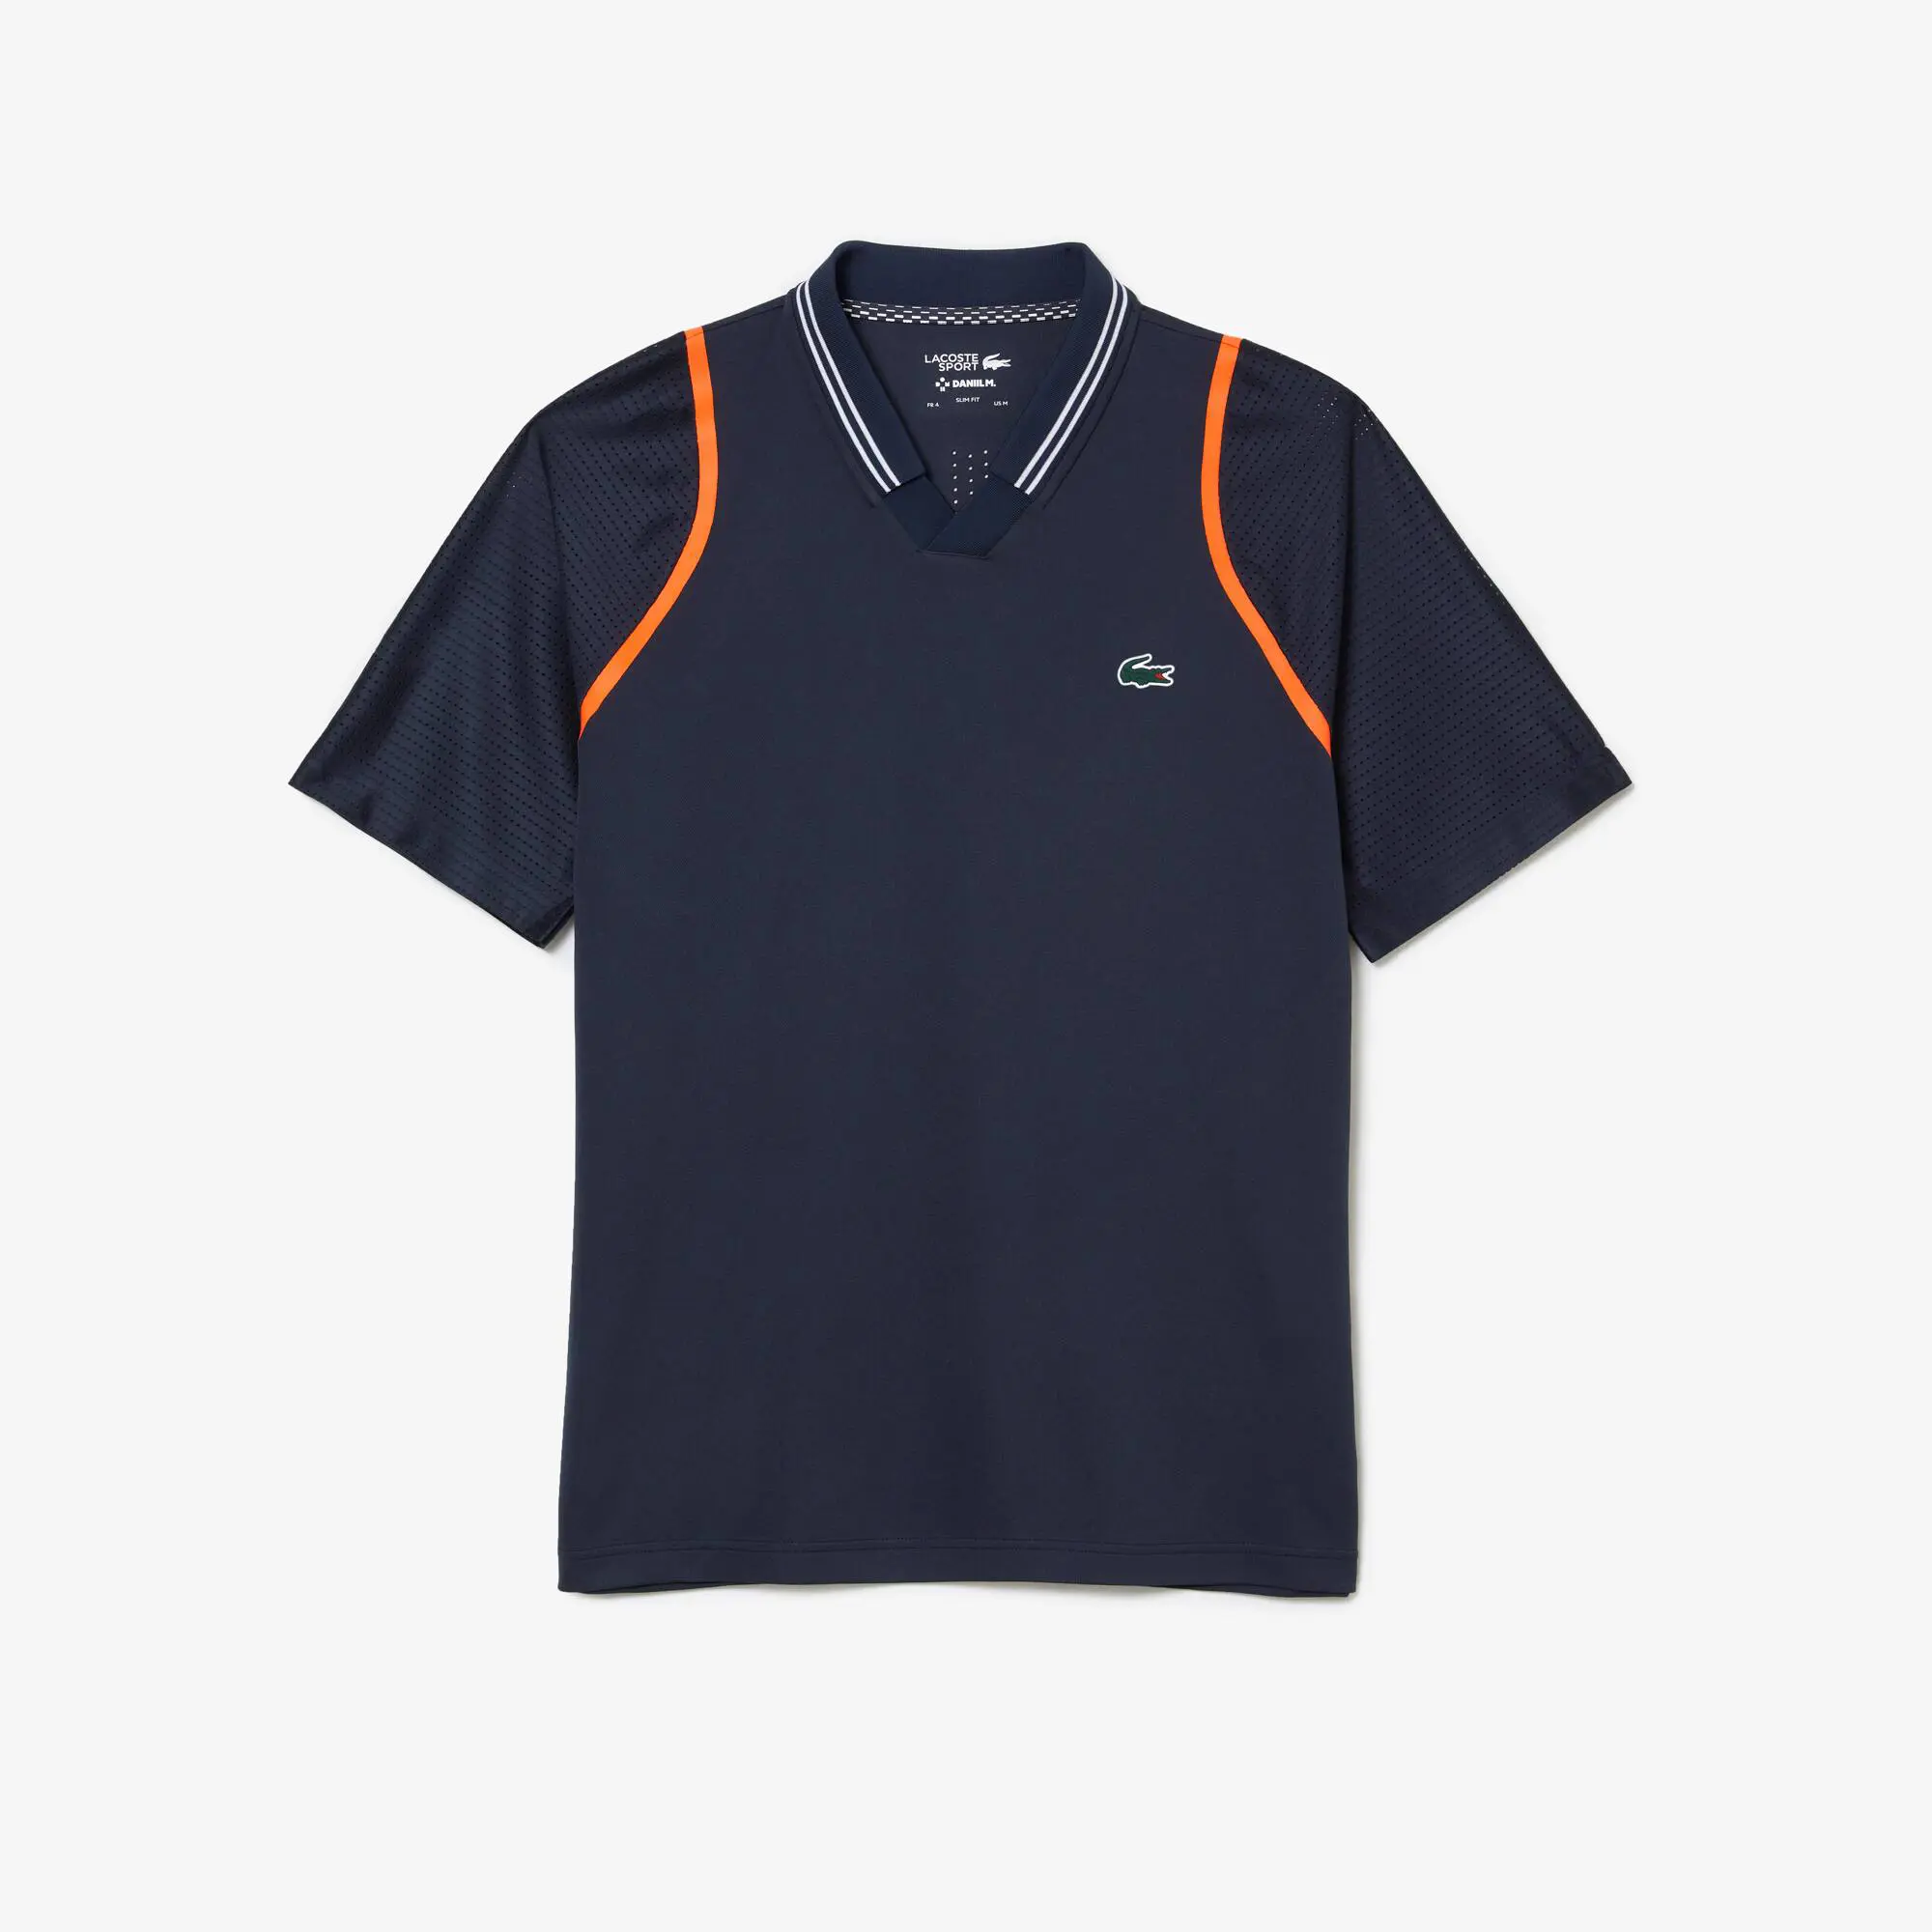 Lacoste Men’s Lacoste Tennis x Daniil Medvedev Polo Shirt. 2